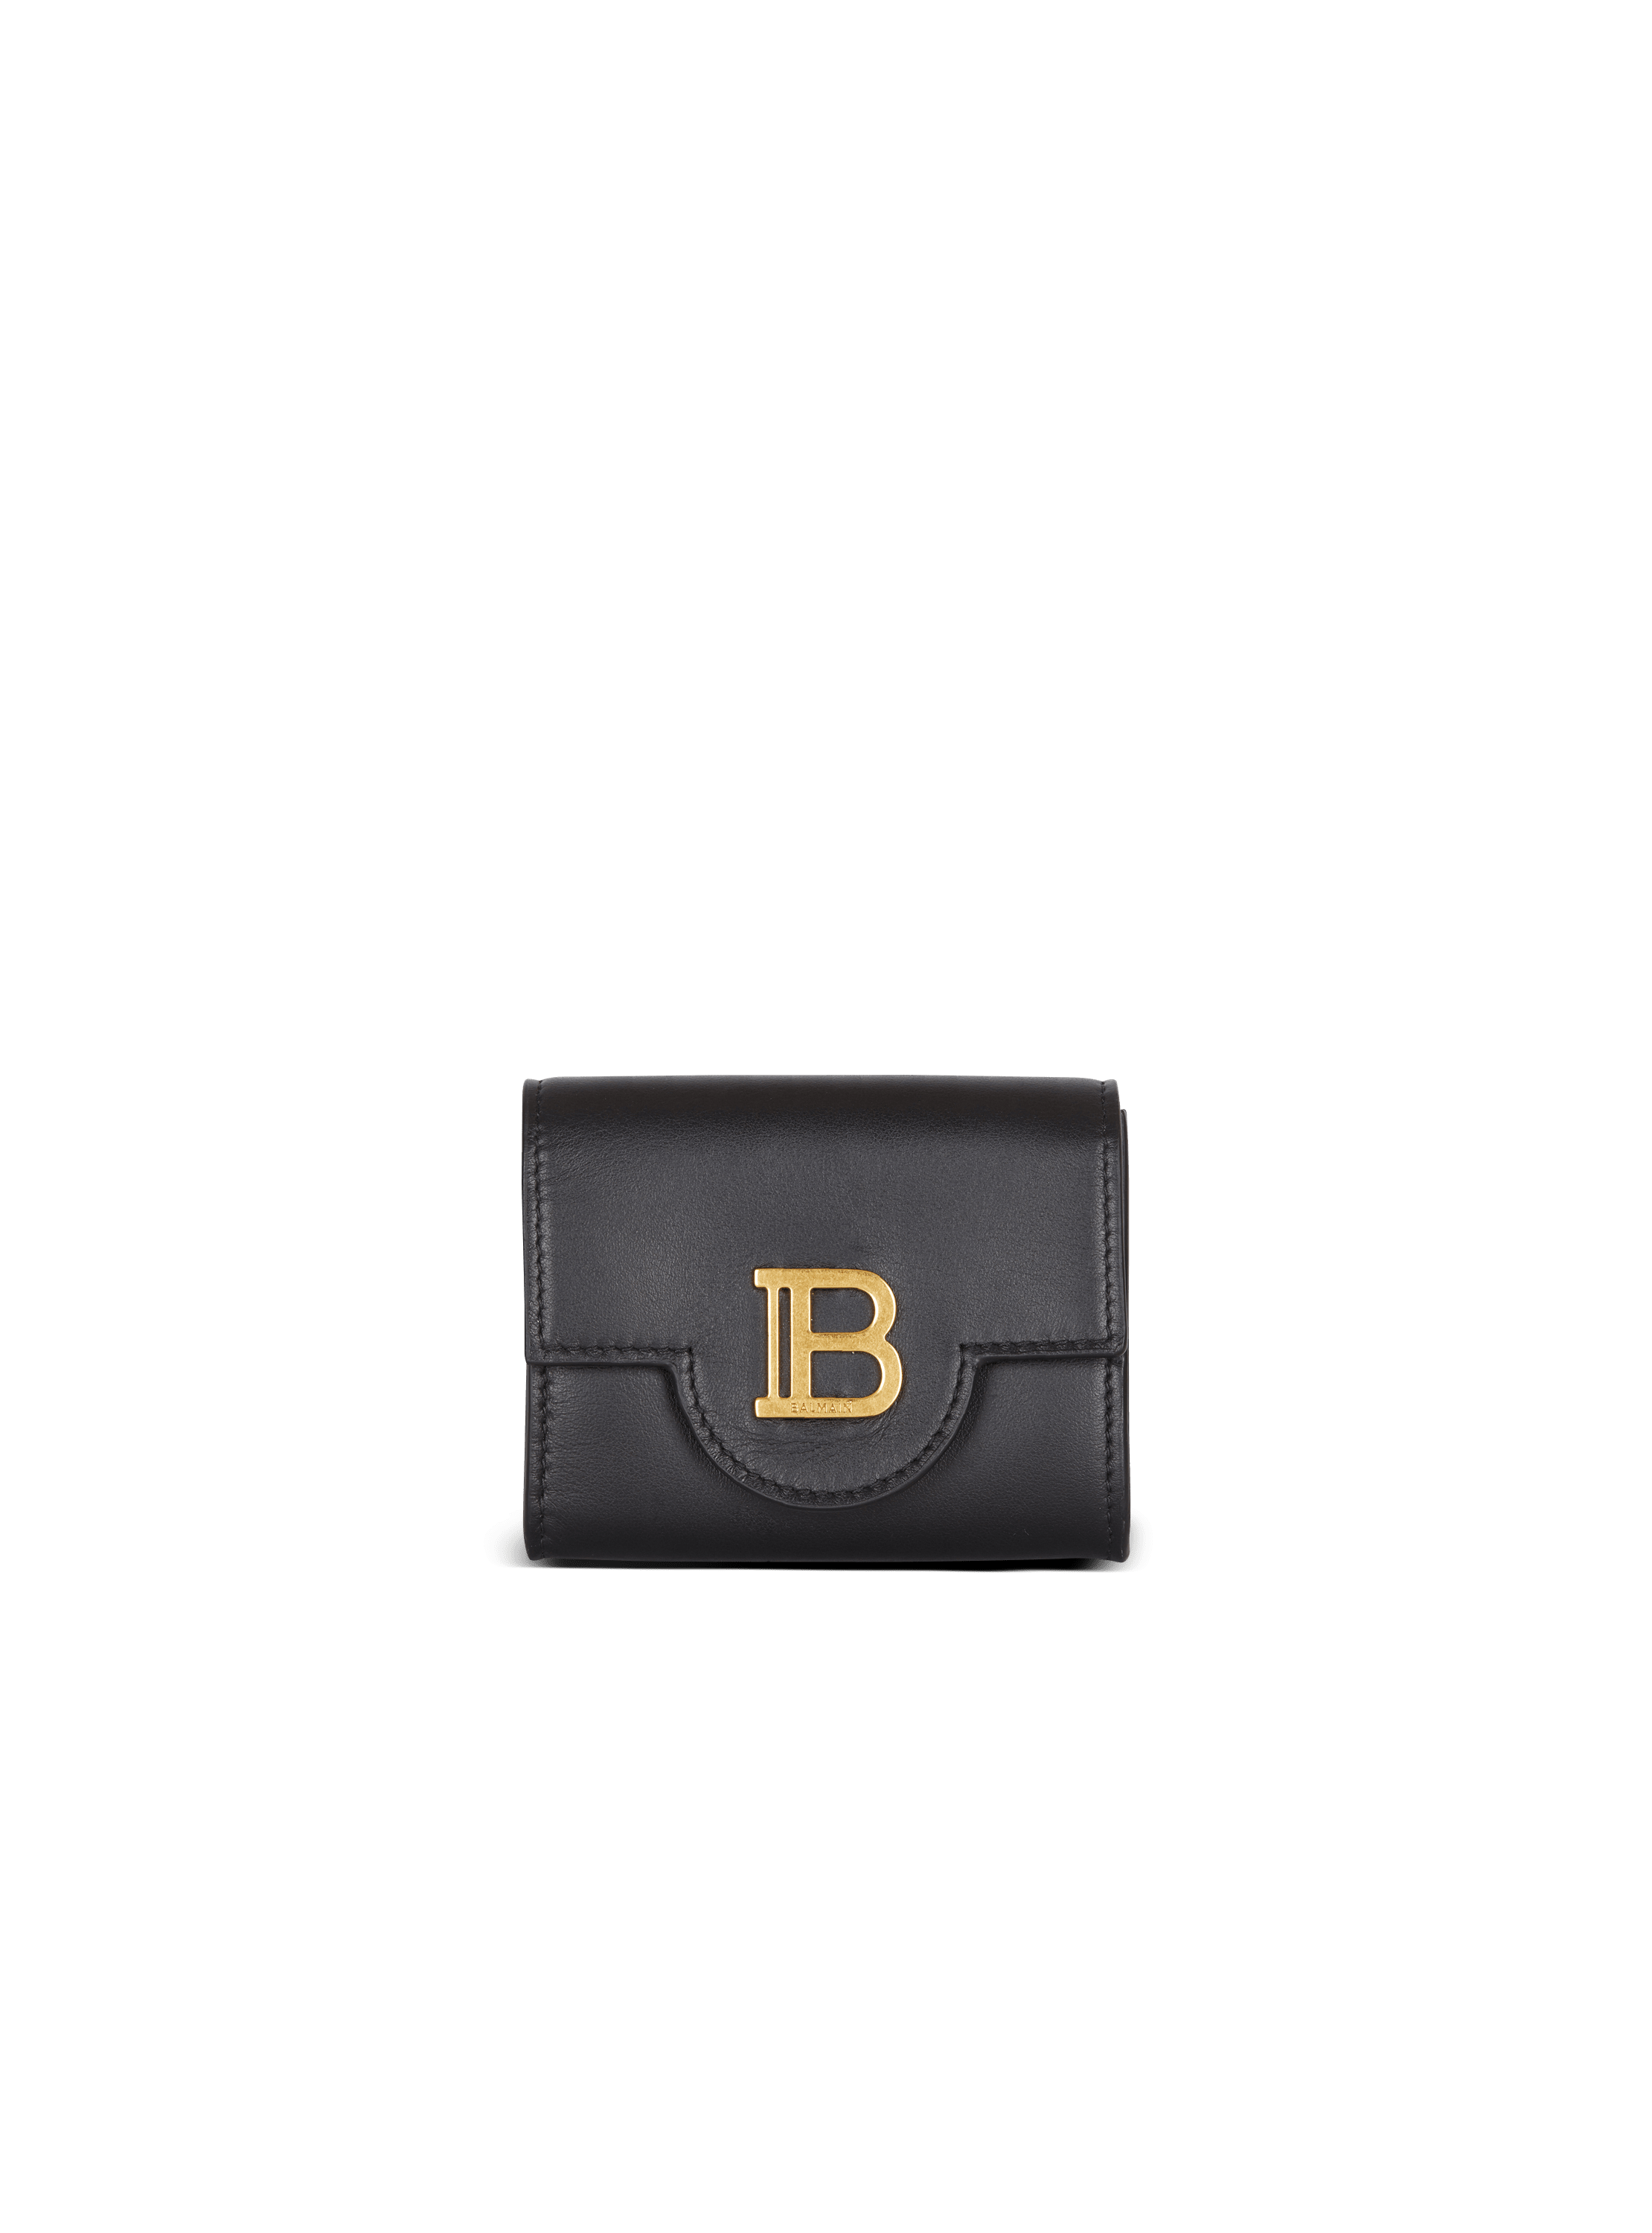 B-Buzz leather purse 